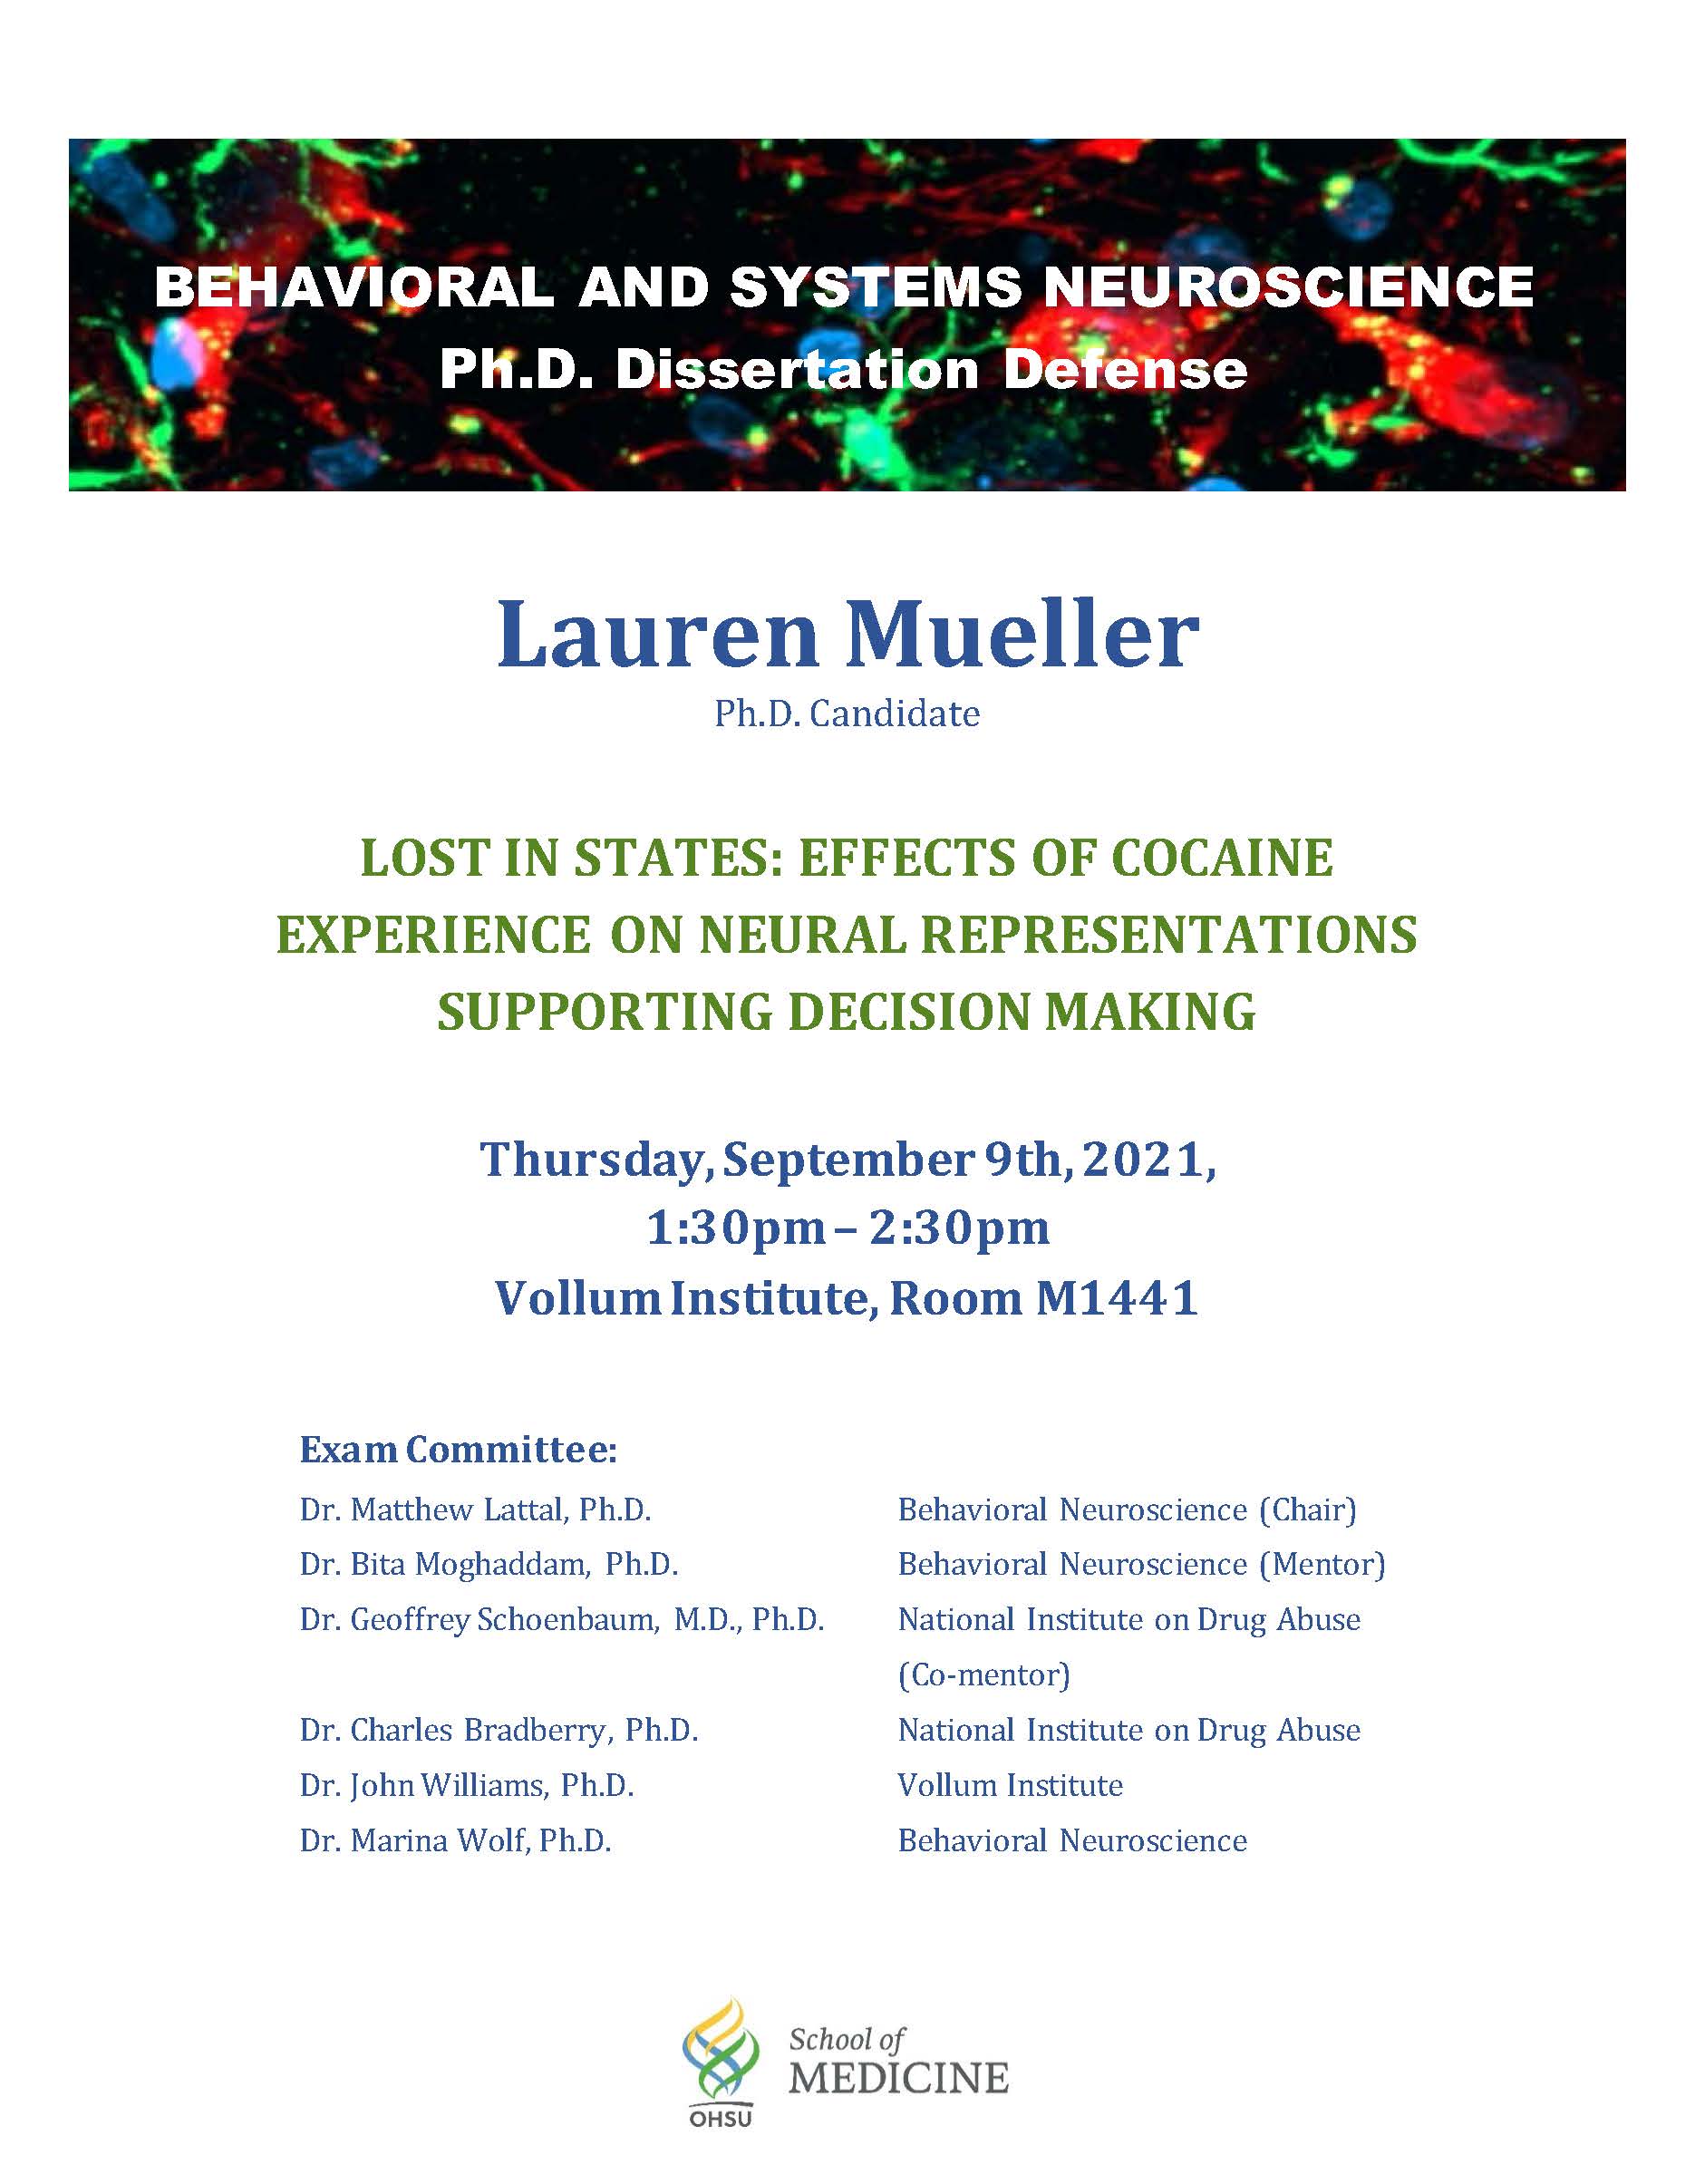 Lauren Mueller Ph.D. Dissertation Defense Flyer